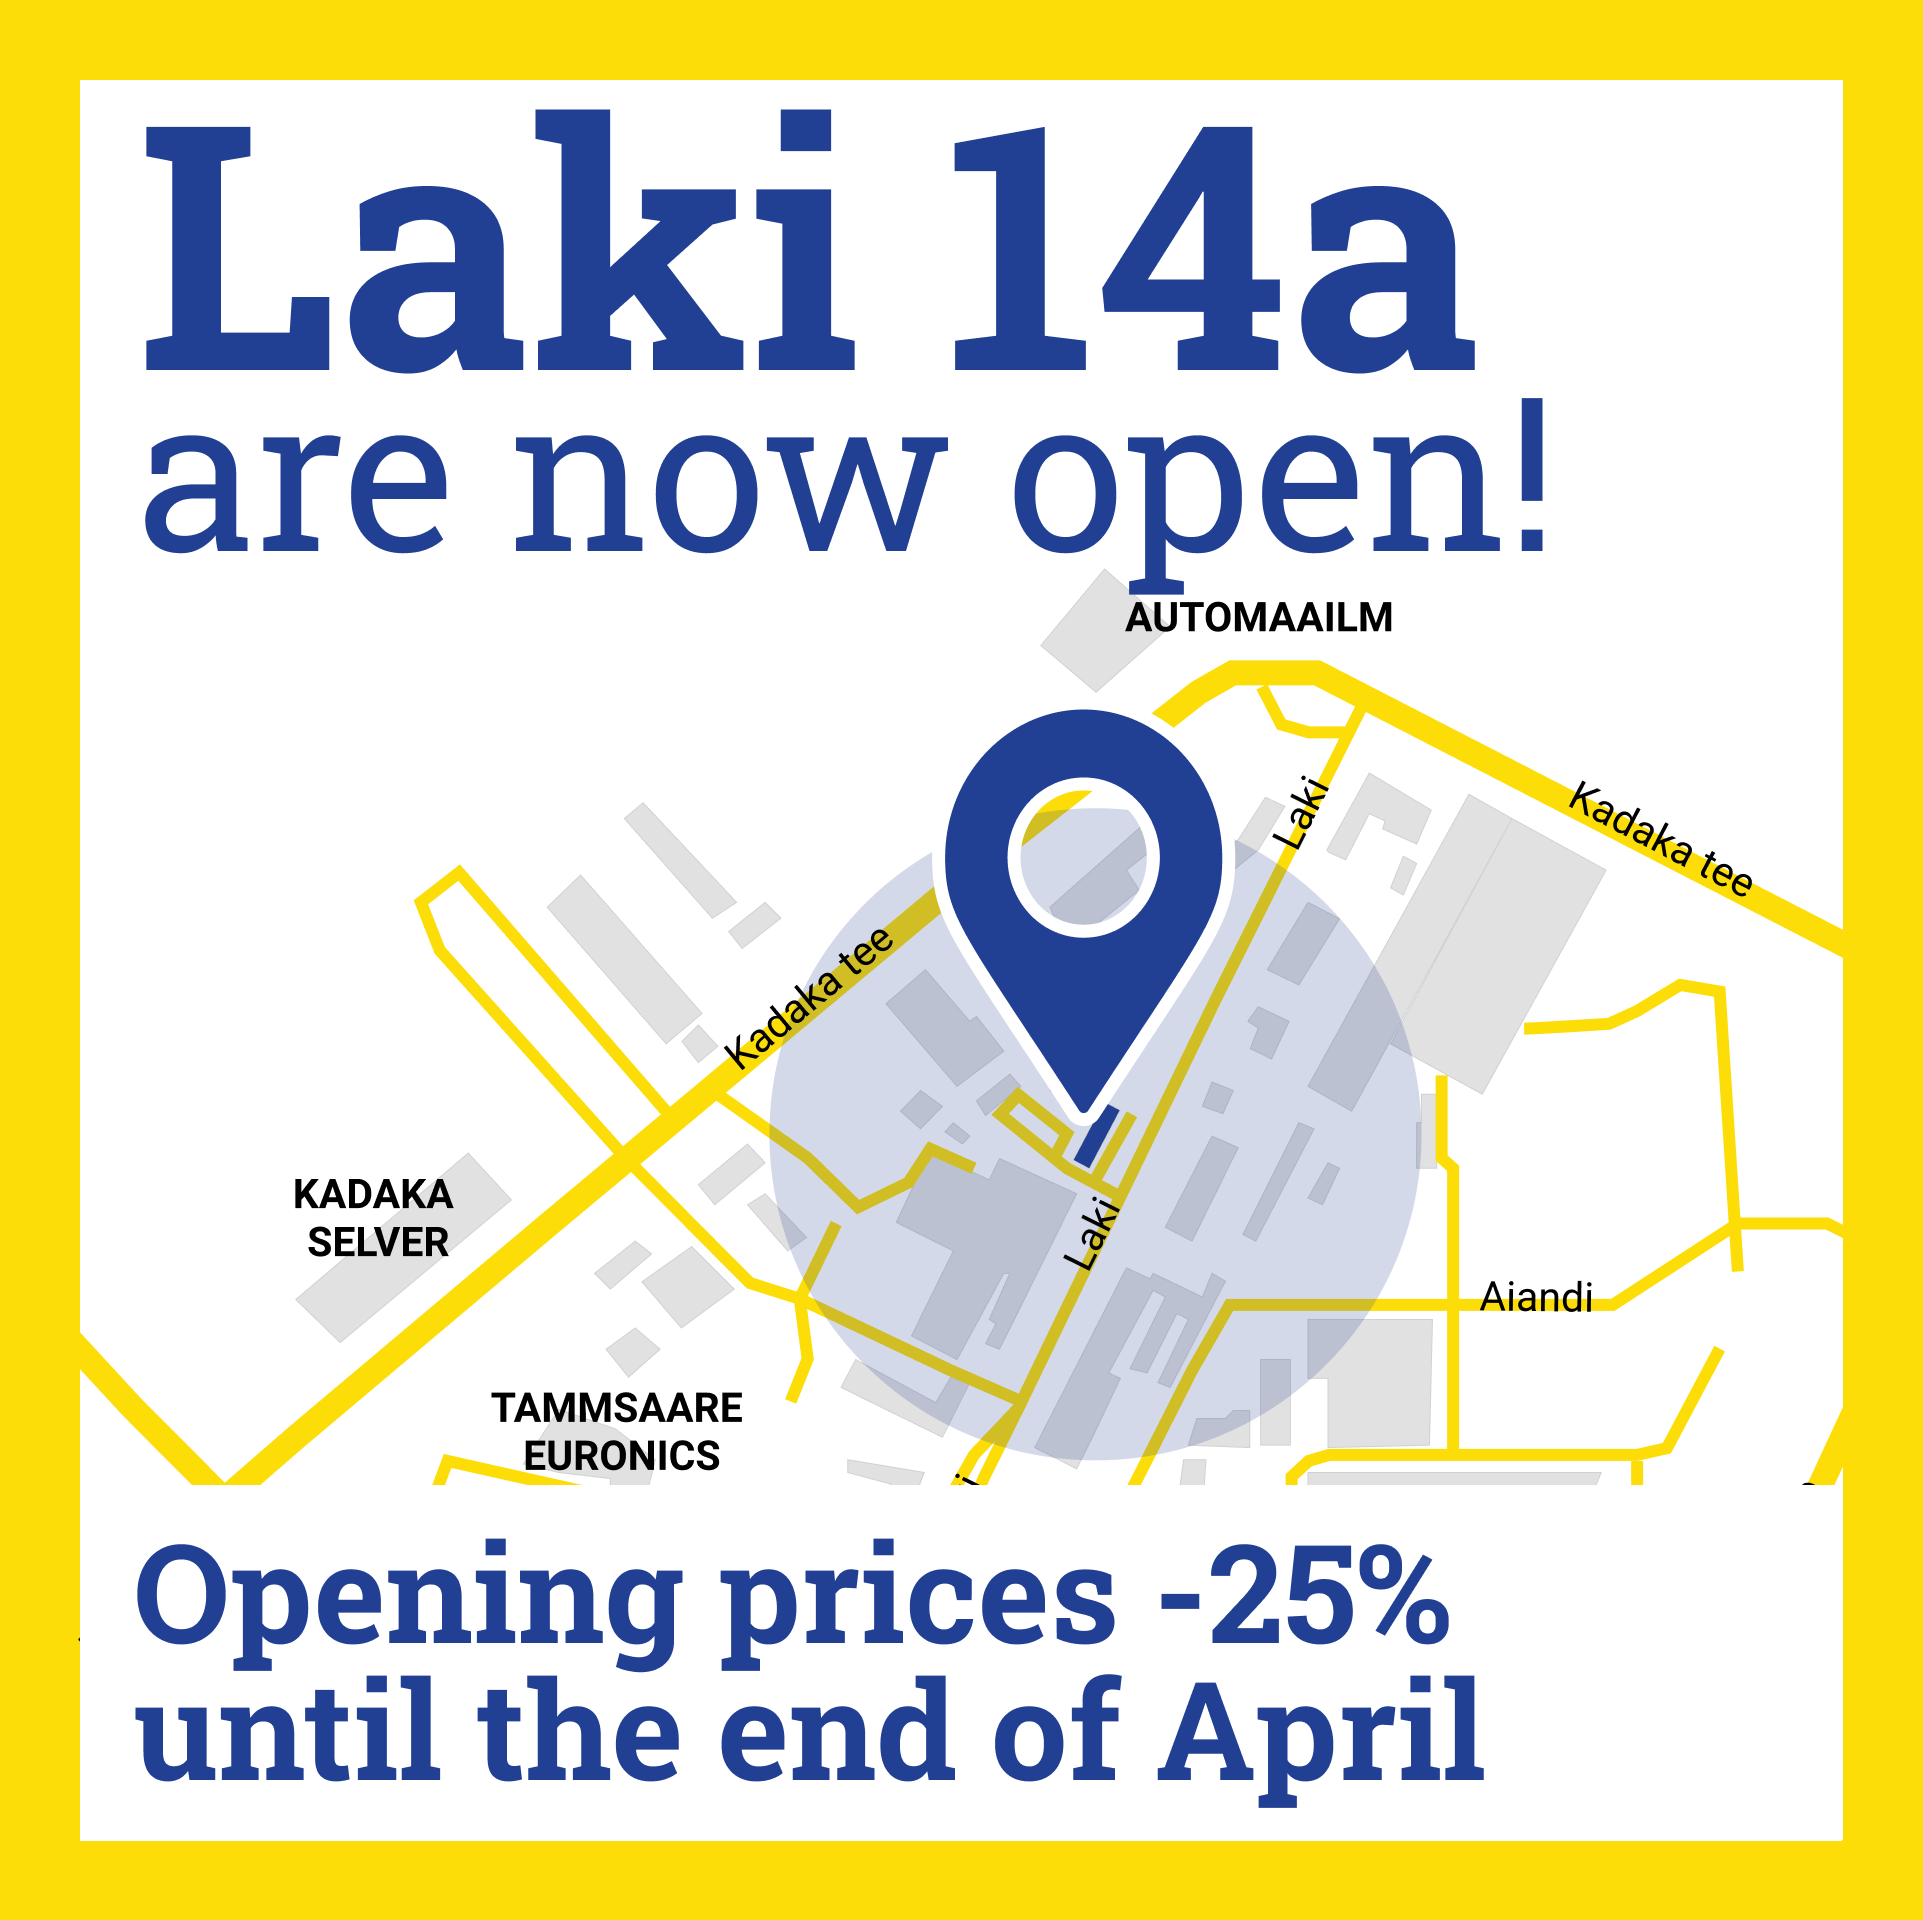 Opening soon Laki 14a